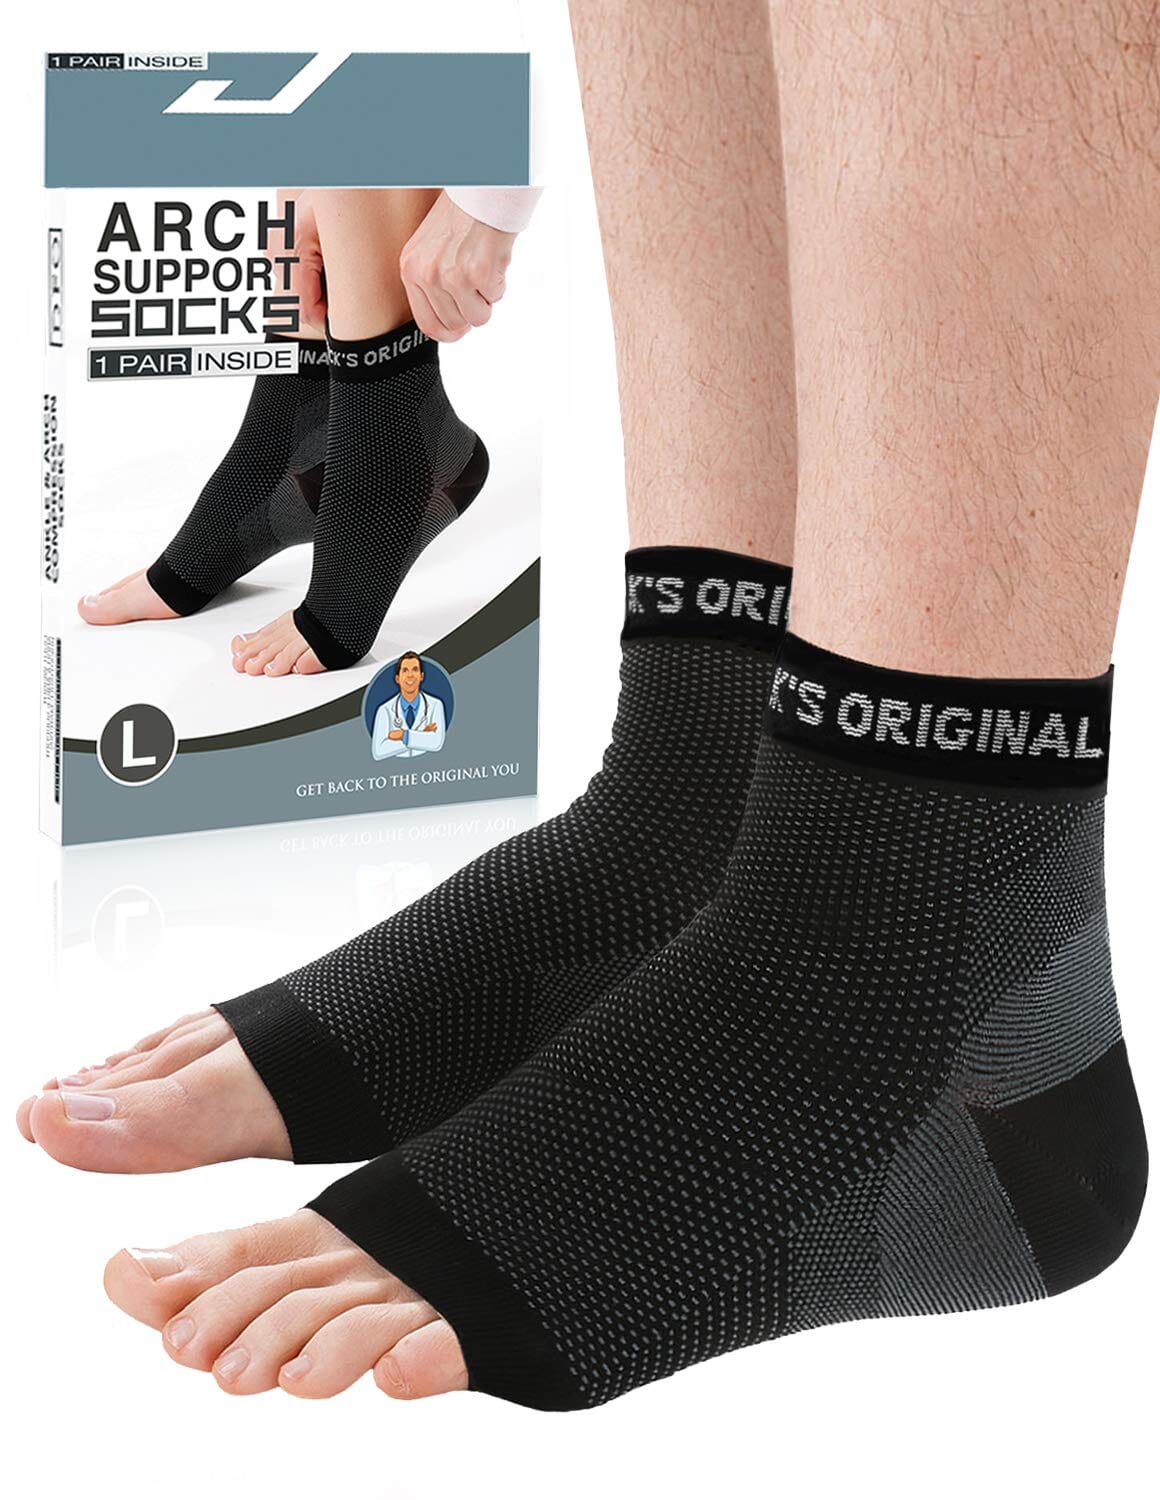 Dr. Frederick's Original Arch Support Socks - 1 Pair - Plantar Fasciitis Socks Foot Pain Dr. Frederick's Original 